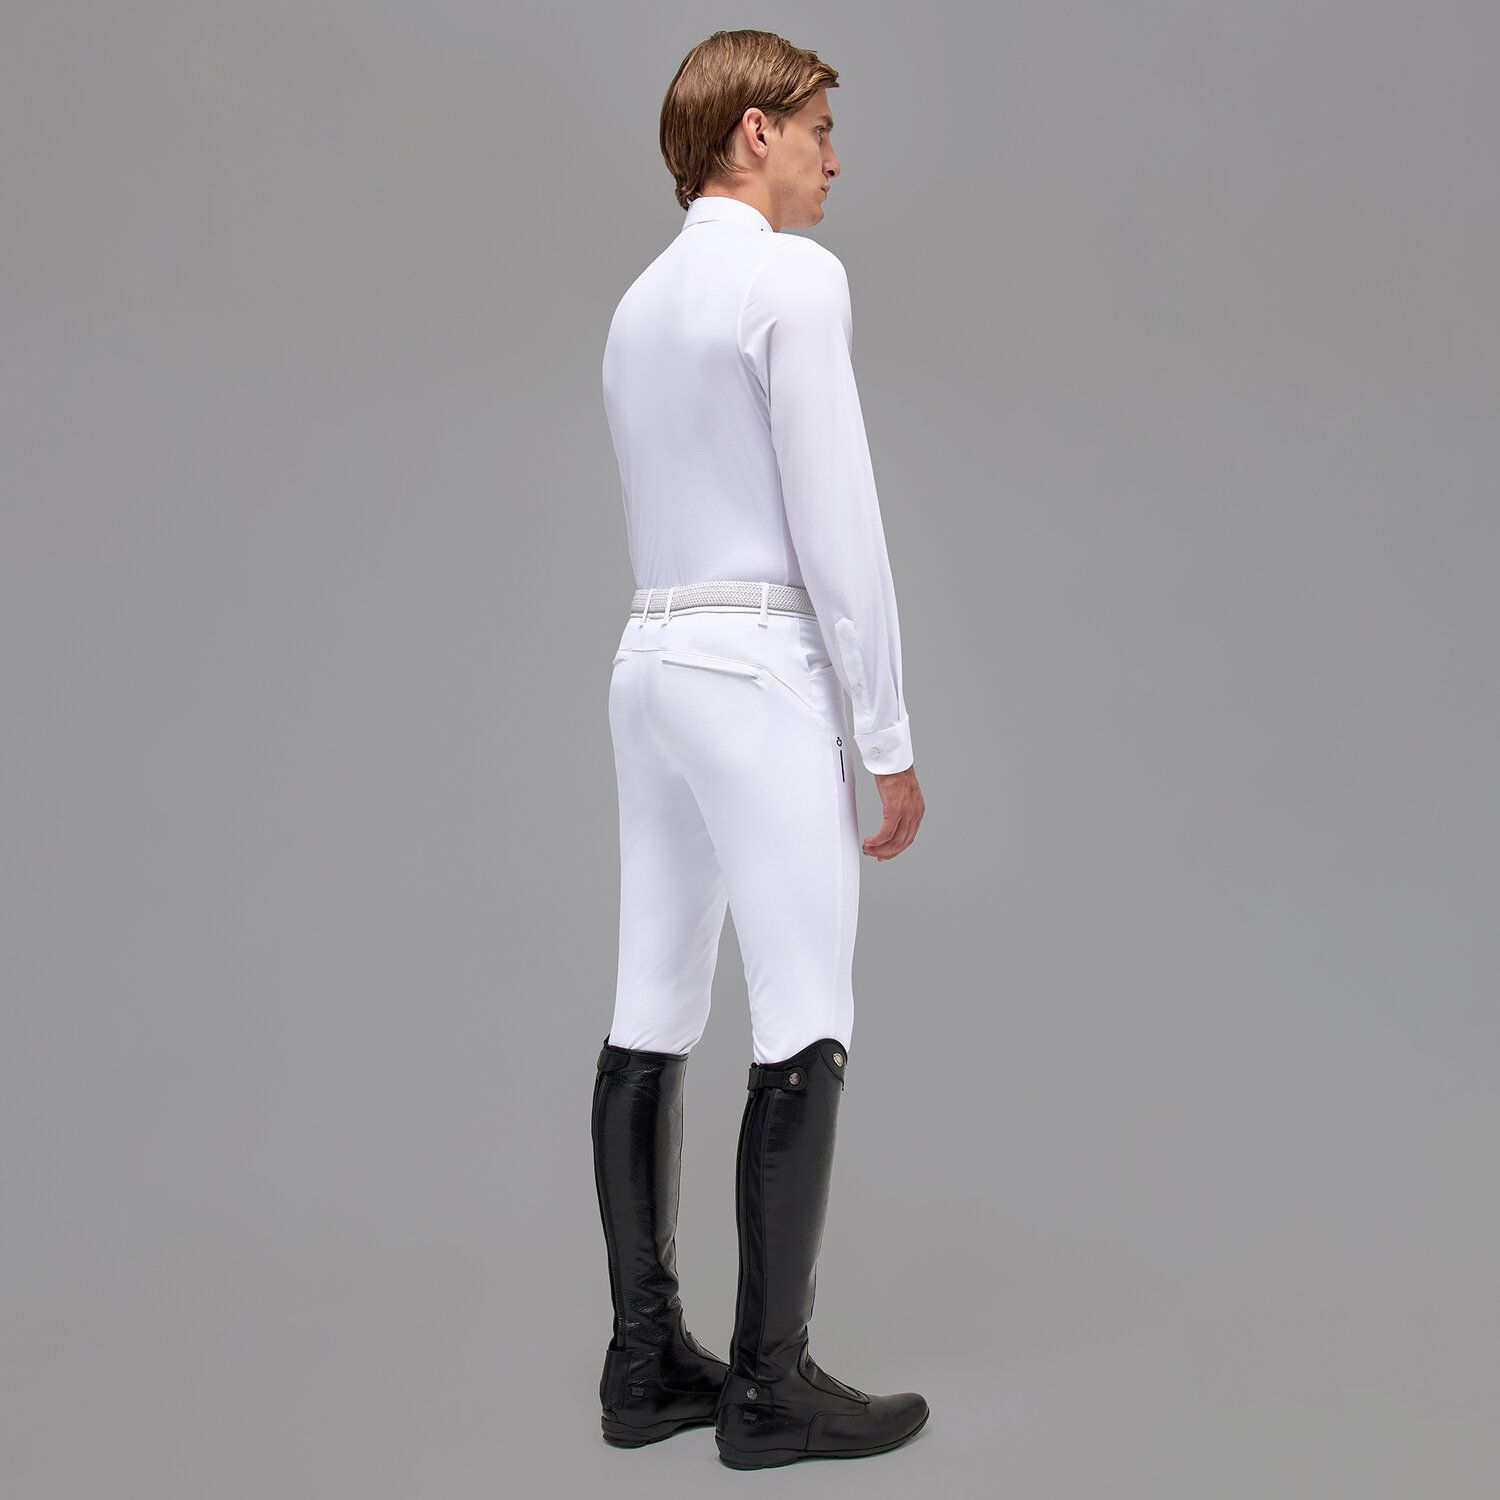 Cavalleria Toscana Revo Men's Competition Shirt WHITE-3